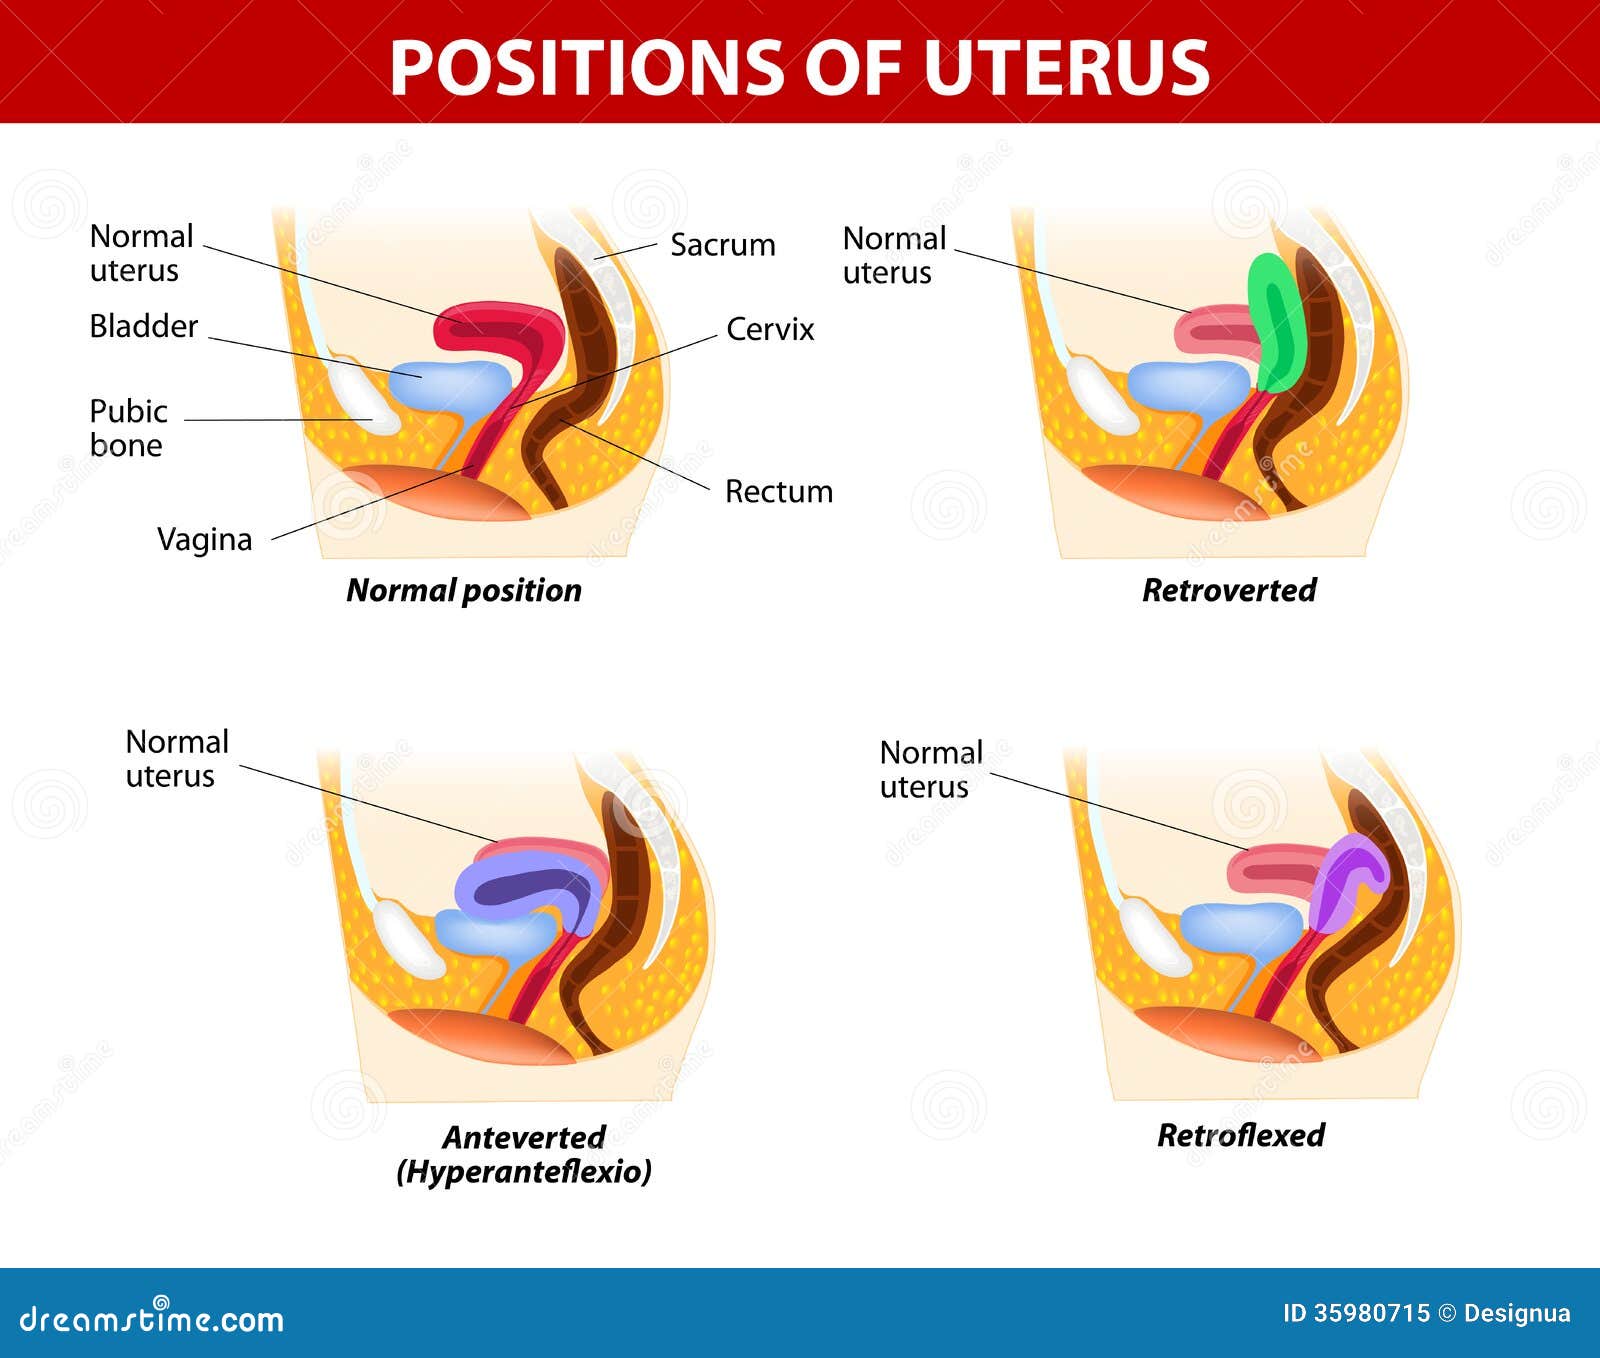 positions of uterus